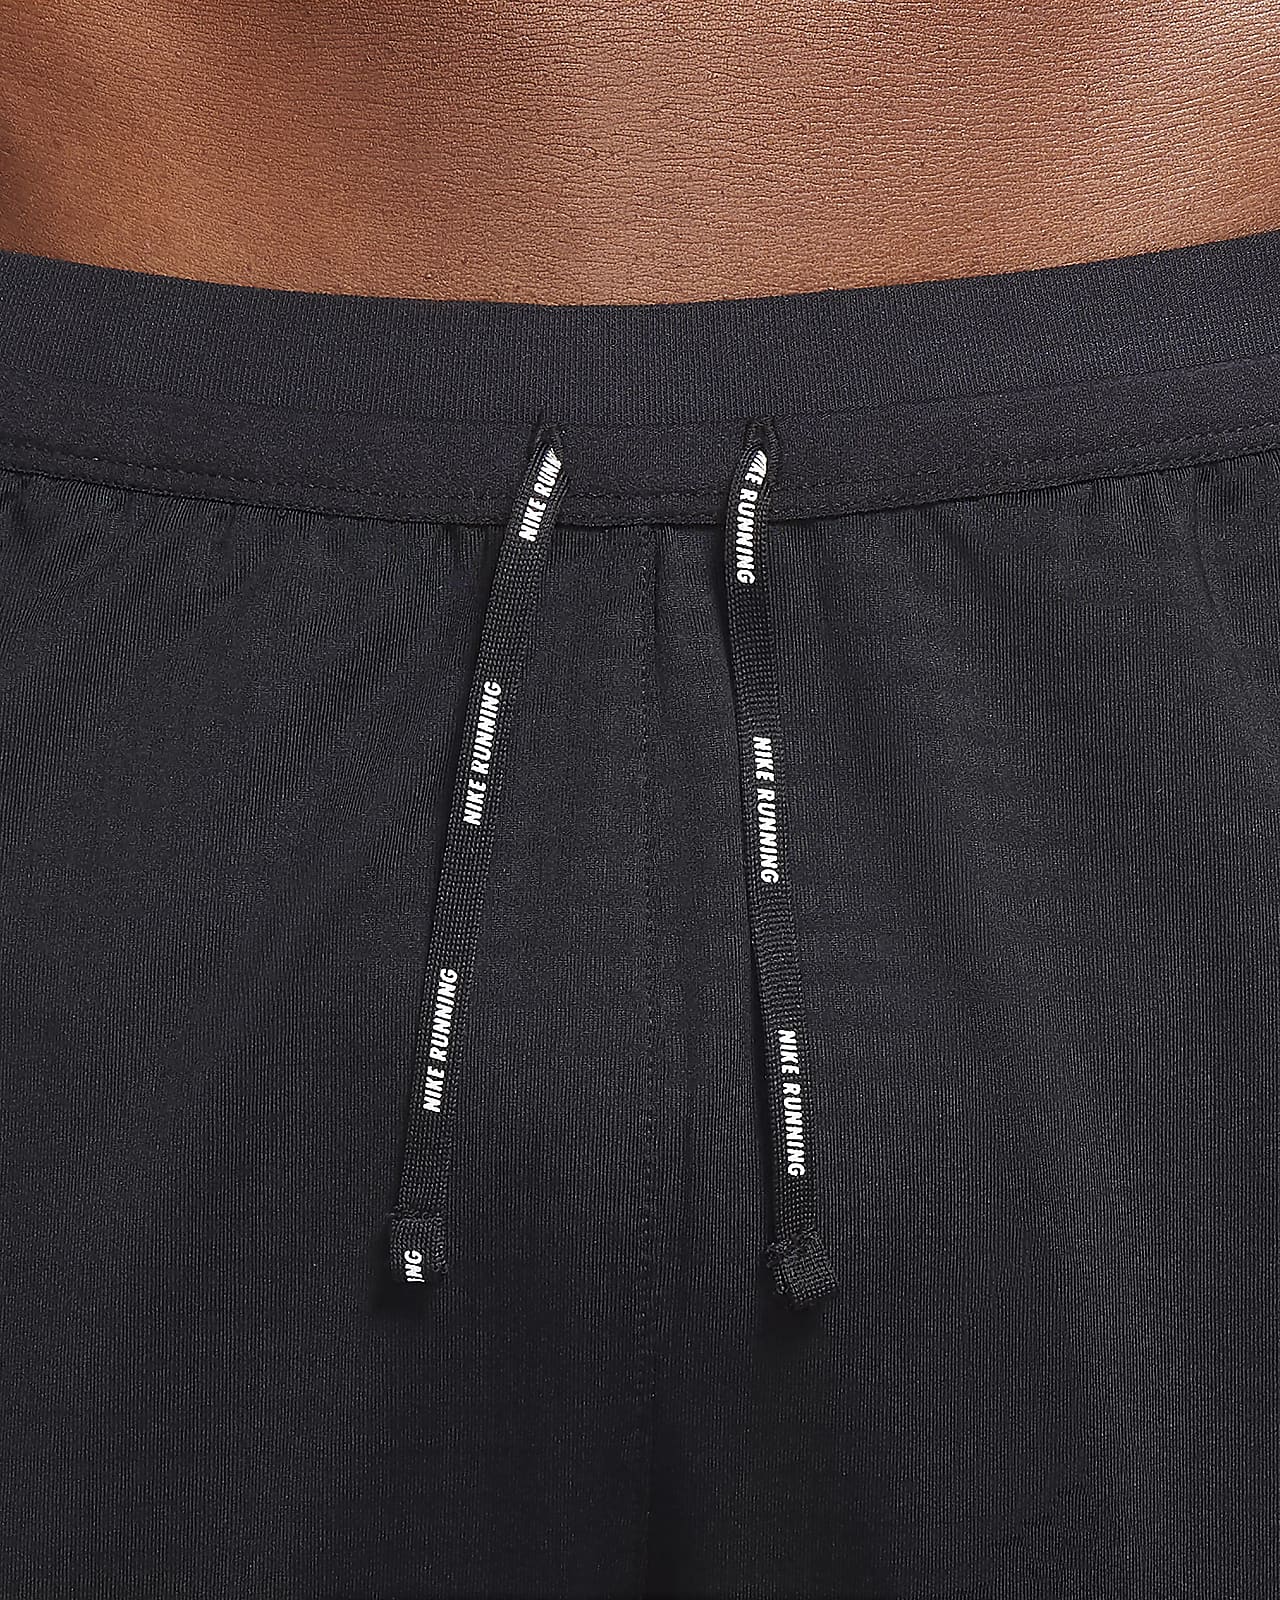 Nike Dri-FIT Phenom Elite Knit Pants - Men's